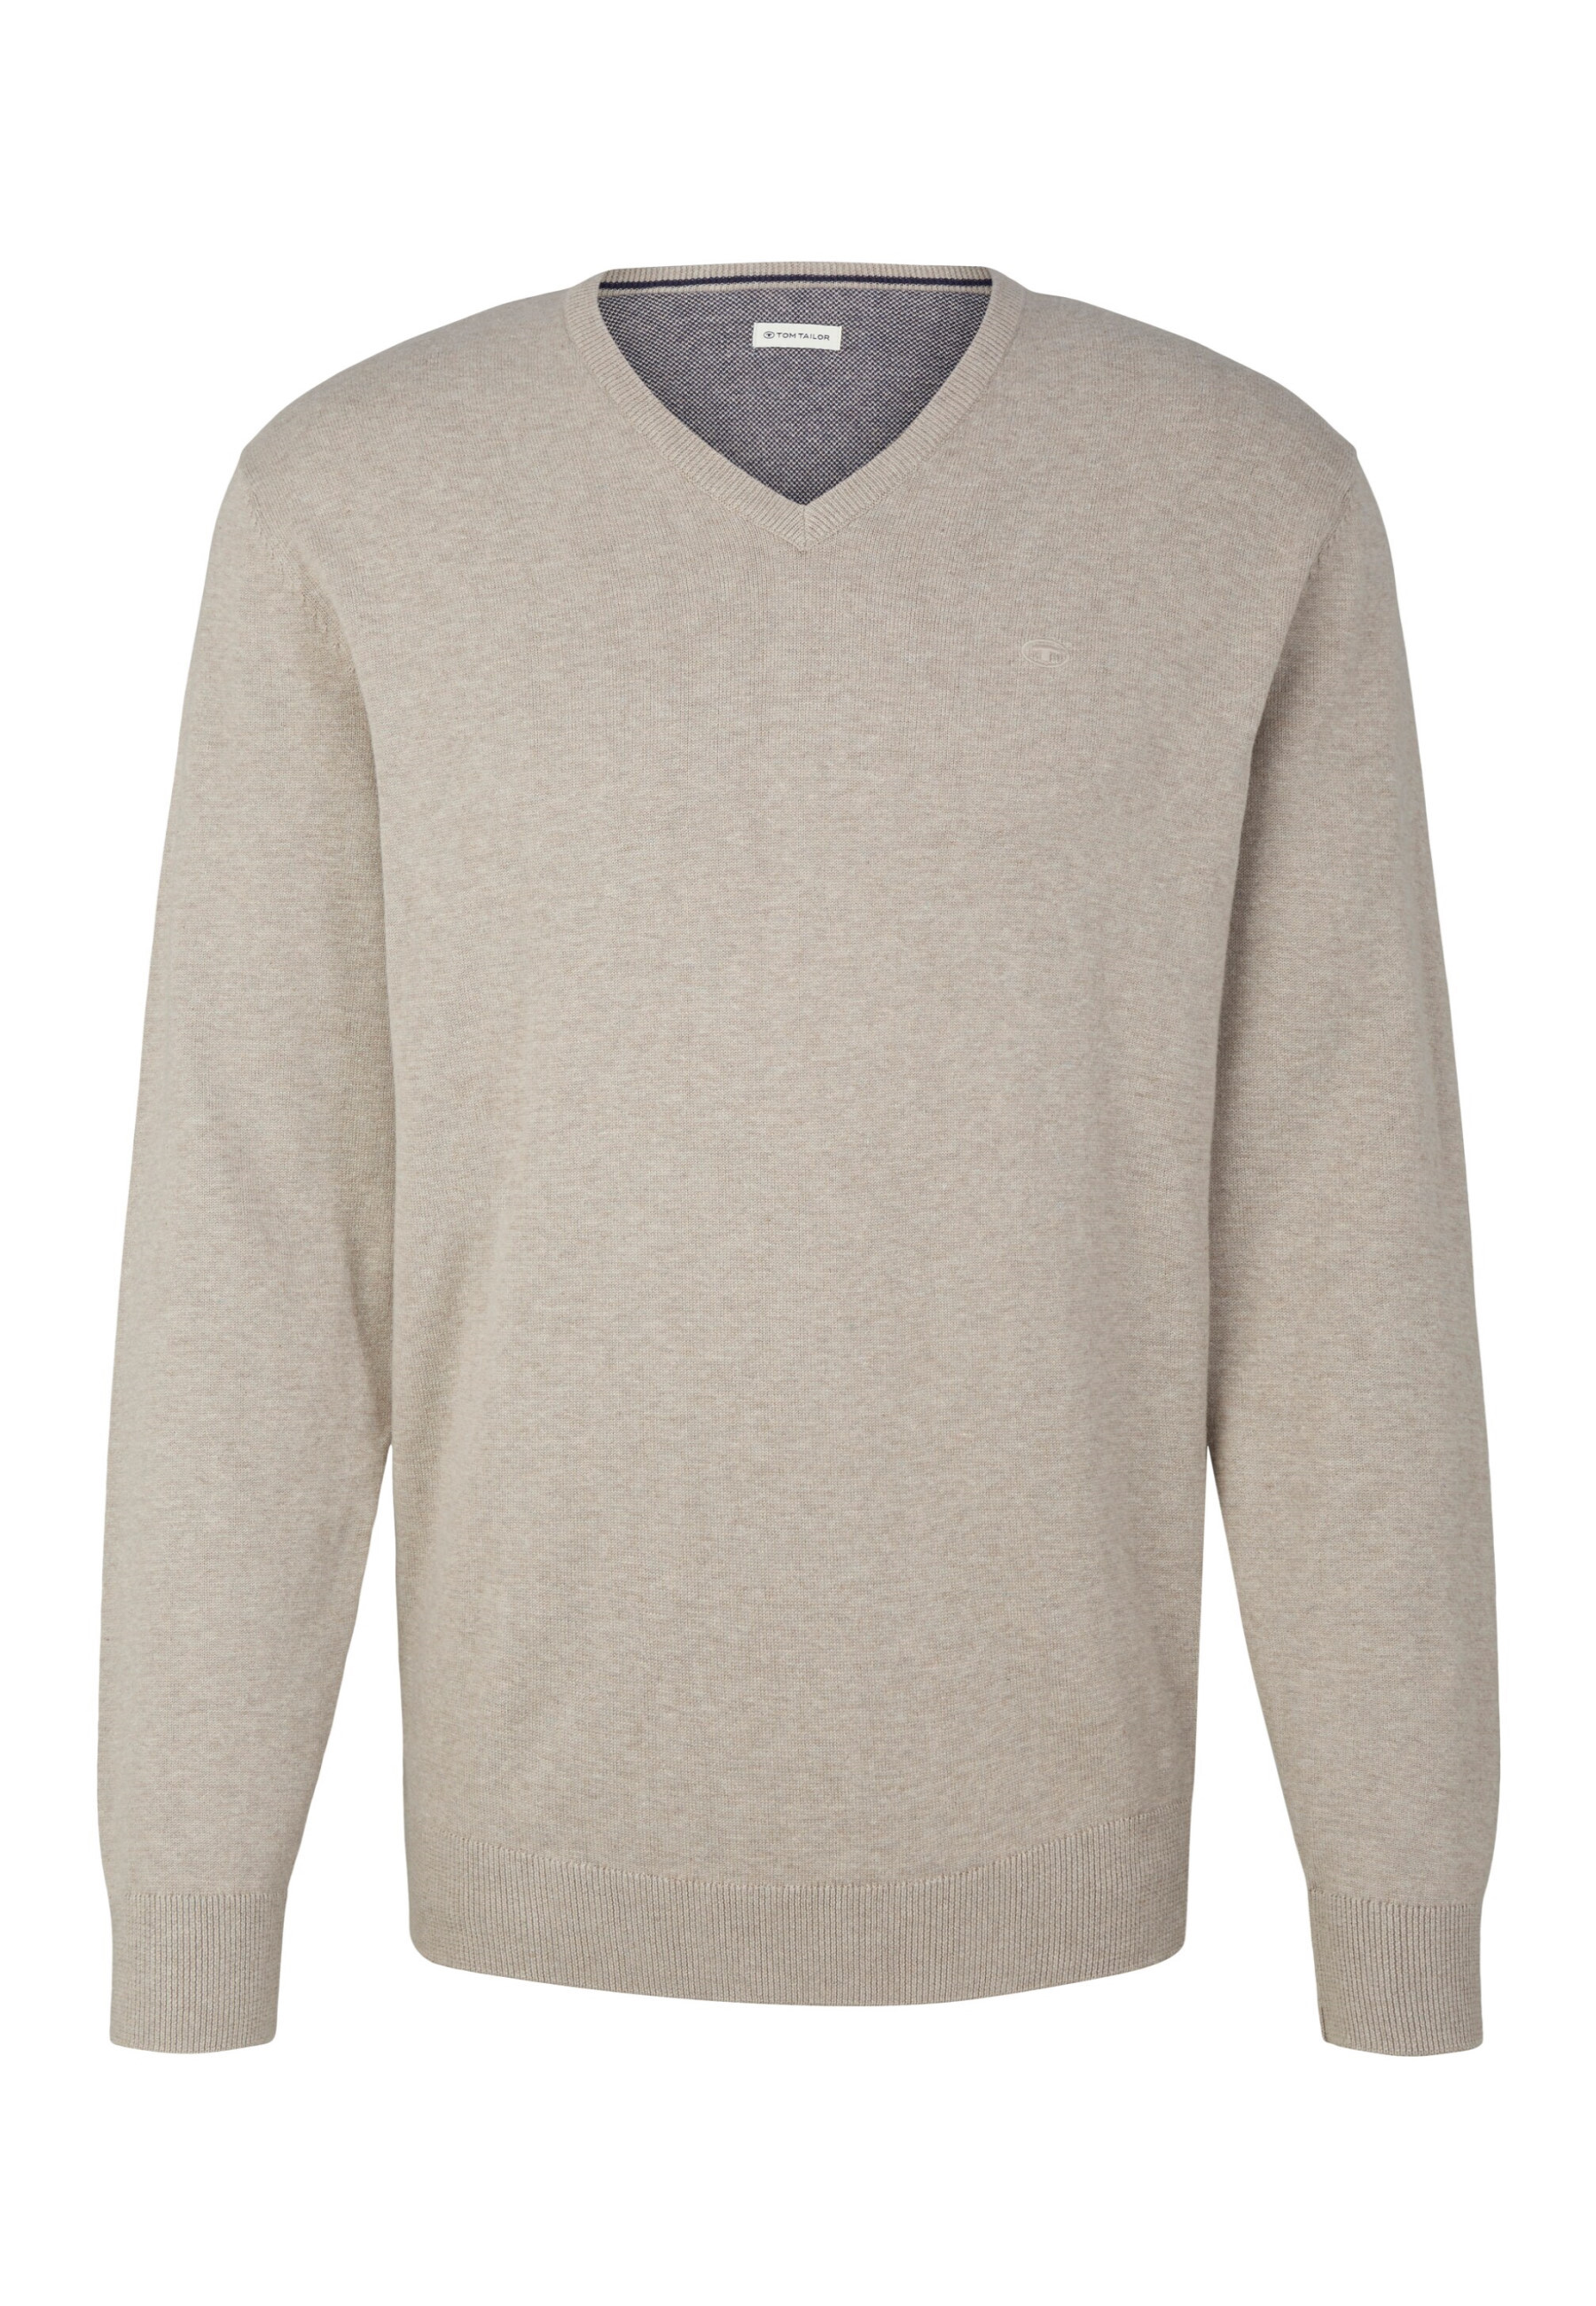 Пуловер Tom Tailor, бежевый пуловер tom tailor размер m бежевый